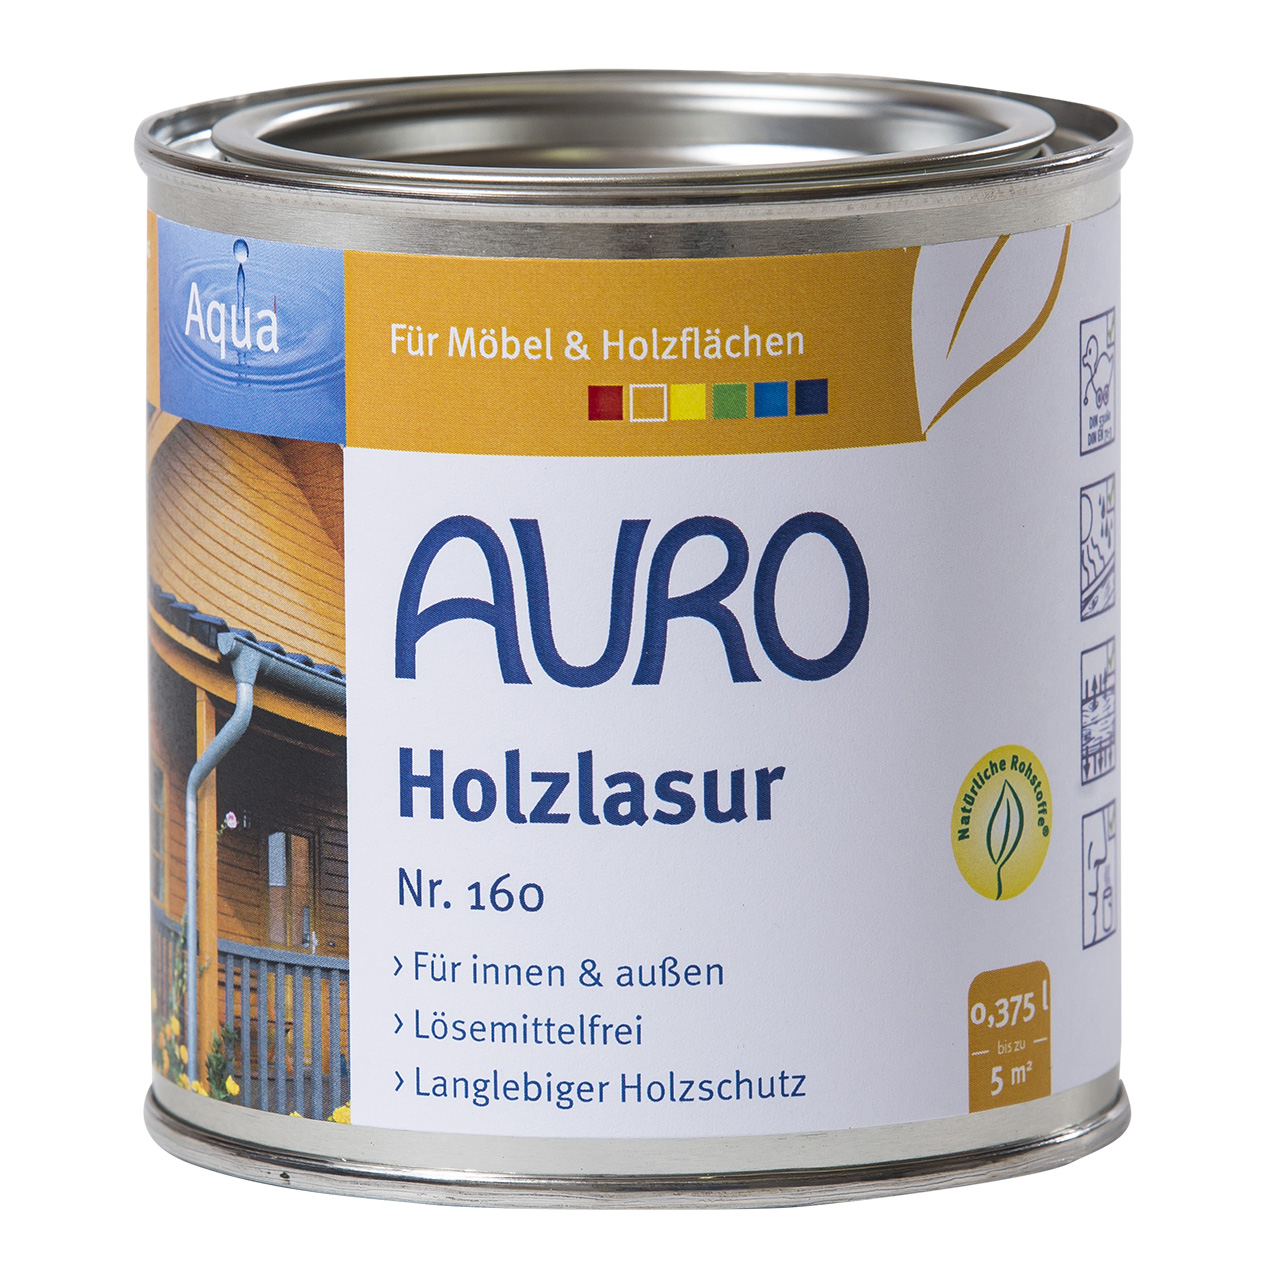 Auro Holzlasur Nr. 160 braun, 0,375ml